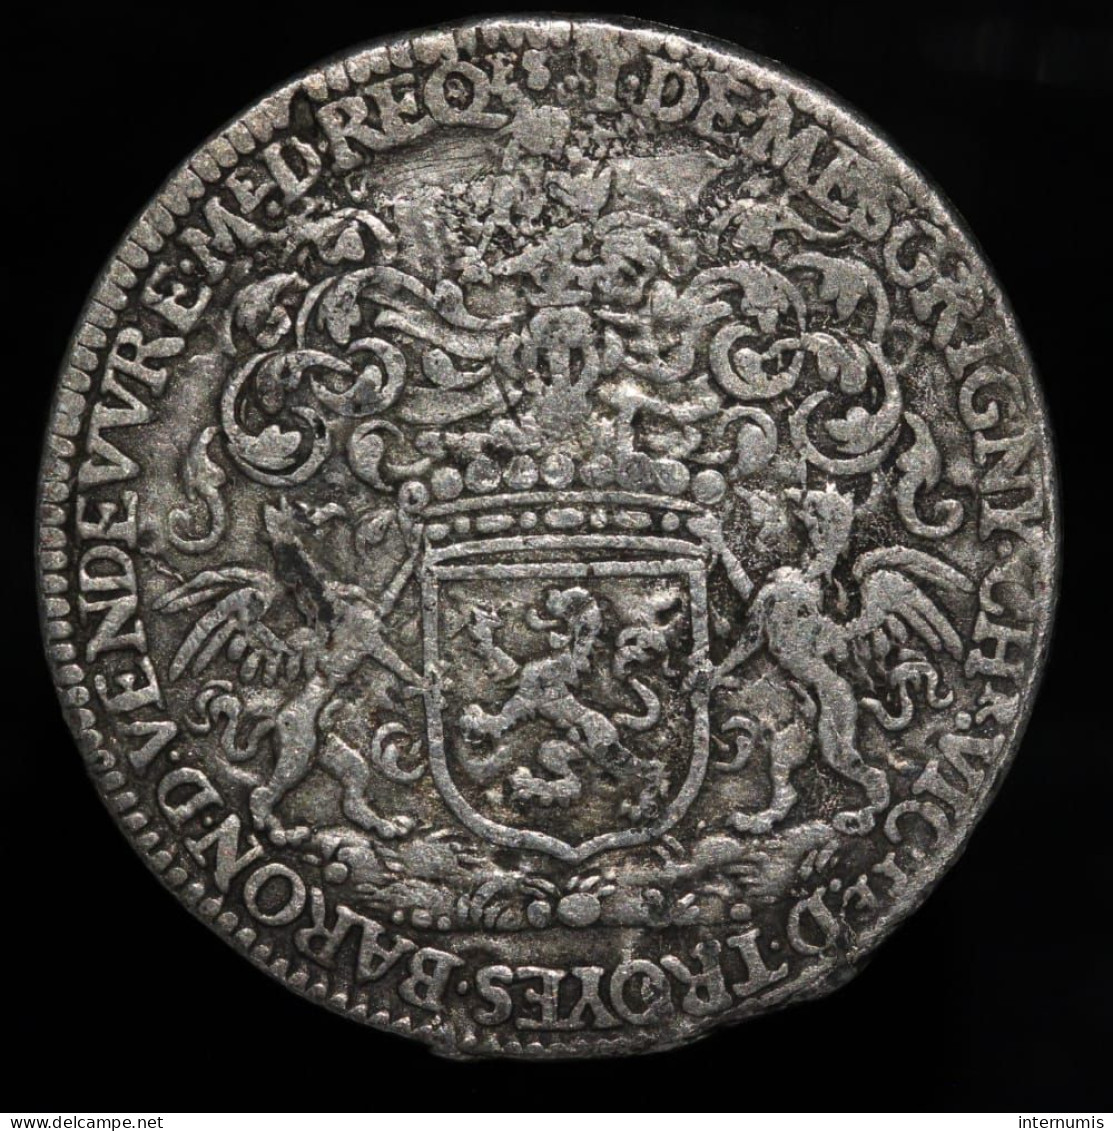 RARE - France, BOURGOGNE, Jean De Mesgrigny & Huberte D’Inteville, 1642, Cuivre Argenté (Silver Plated Copper) - Royal / Of Nobility